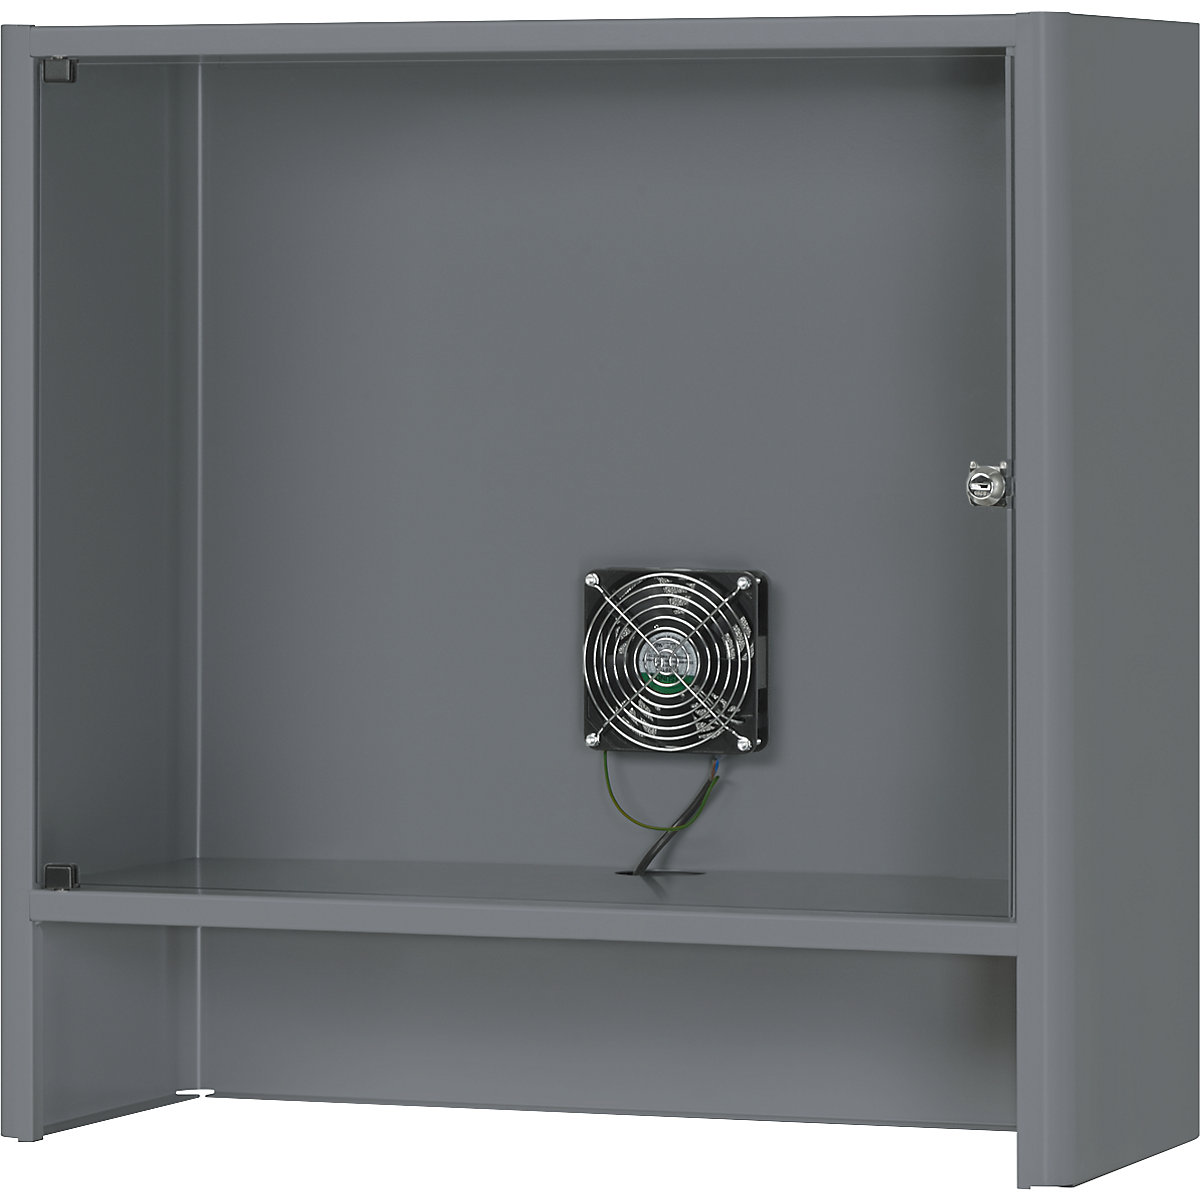 RAU – Monitor housing with integrated ventilation fan, HxWxD 710 x 720 x 300 mm, metallic charcoal